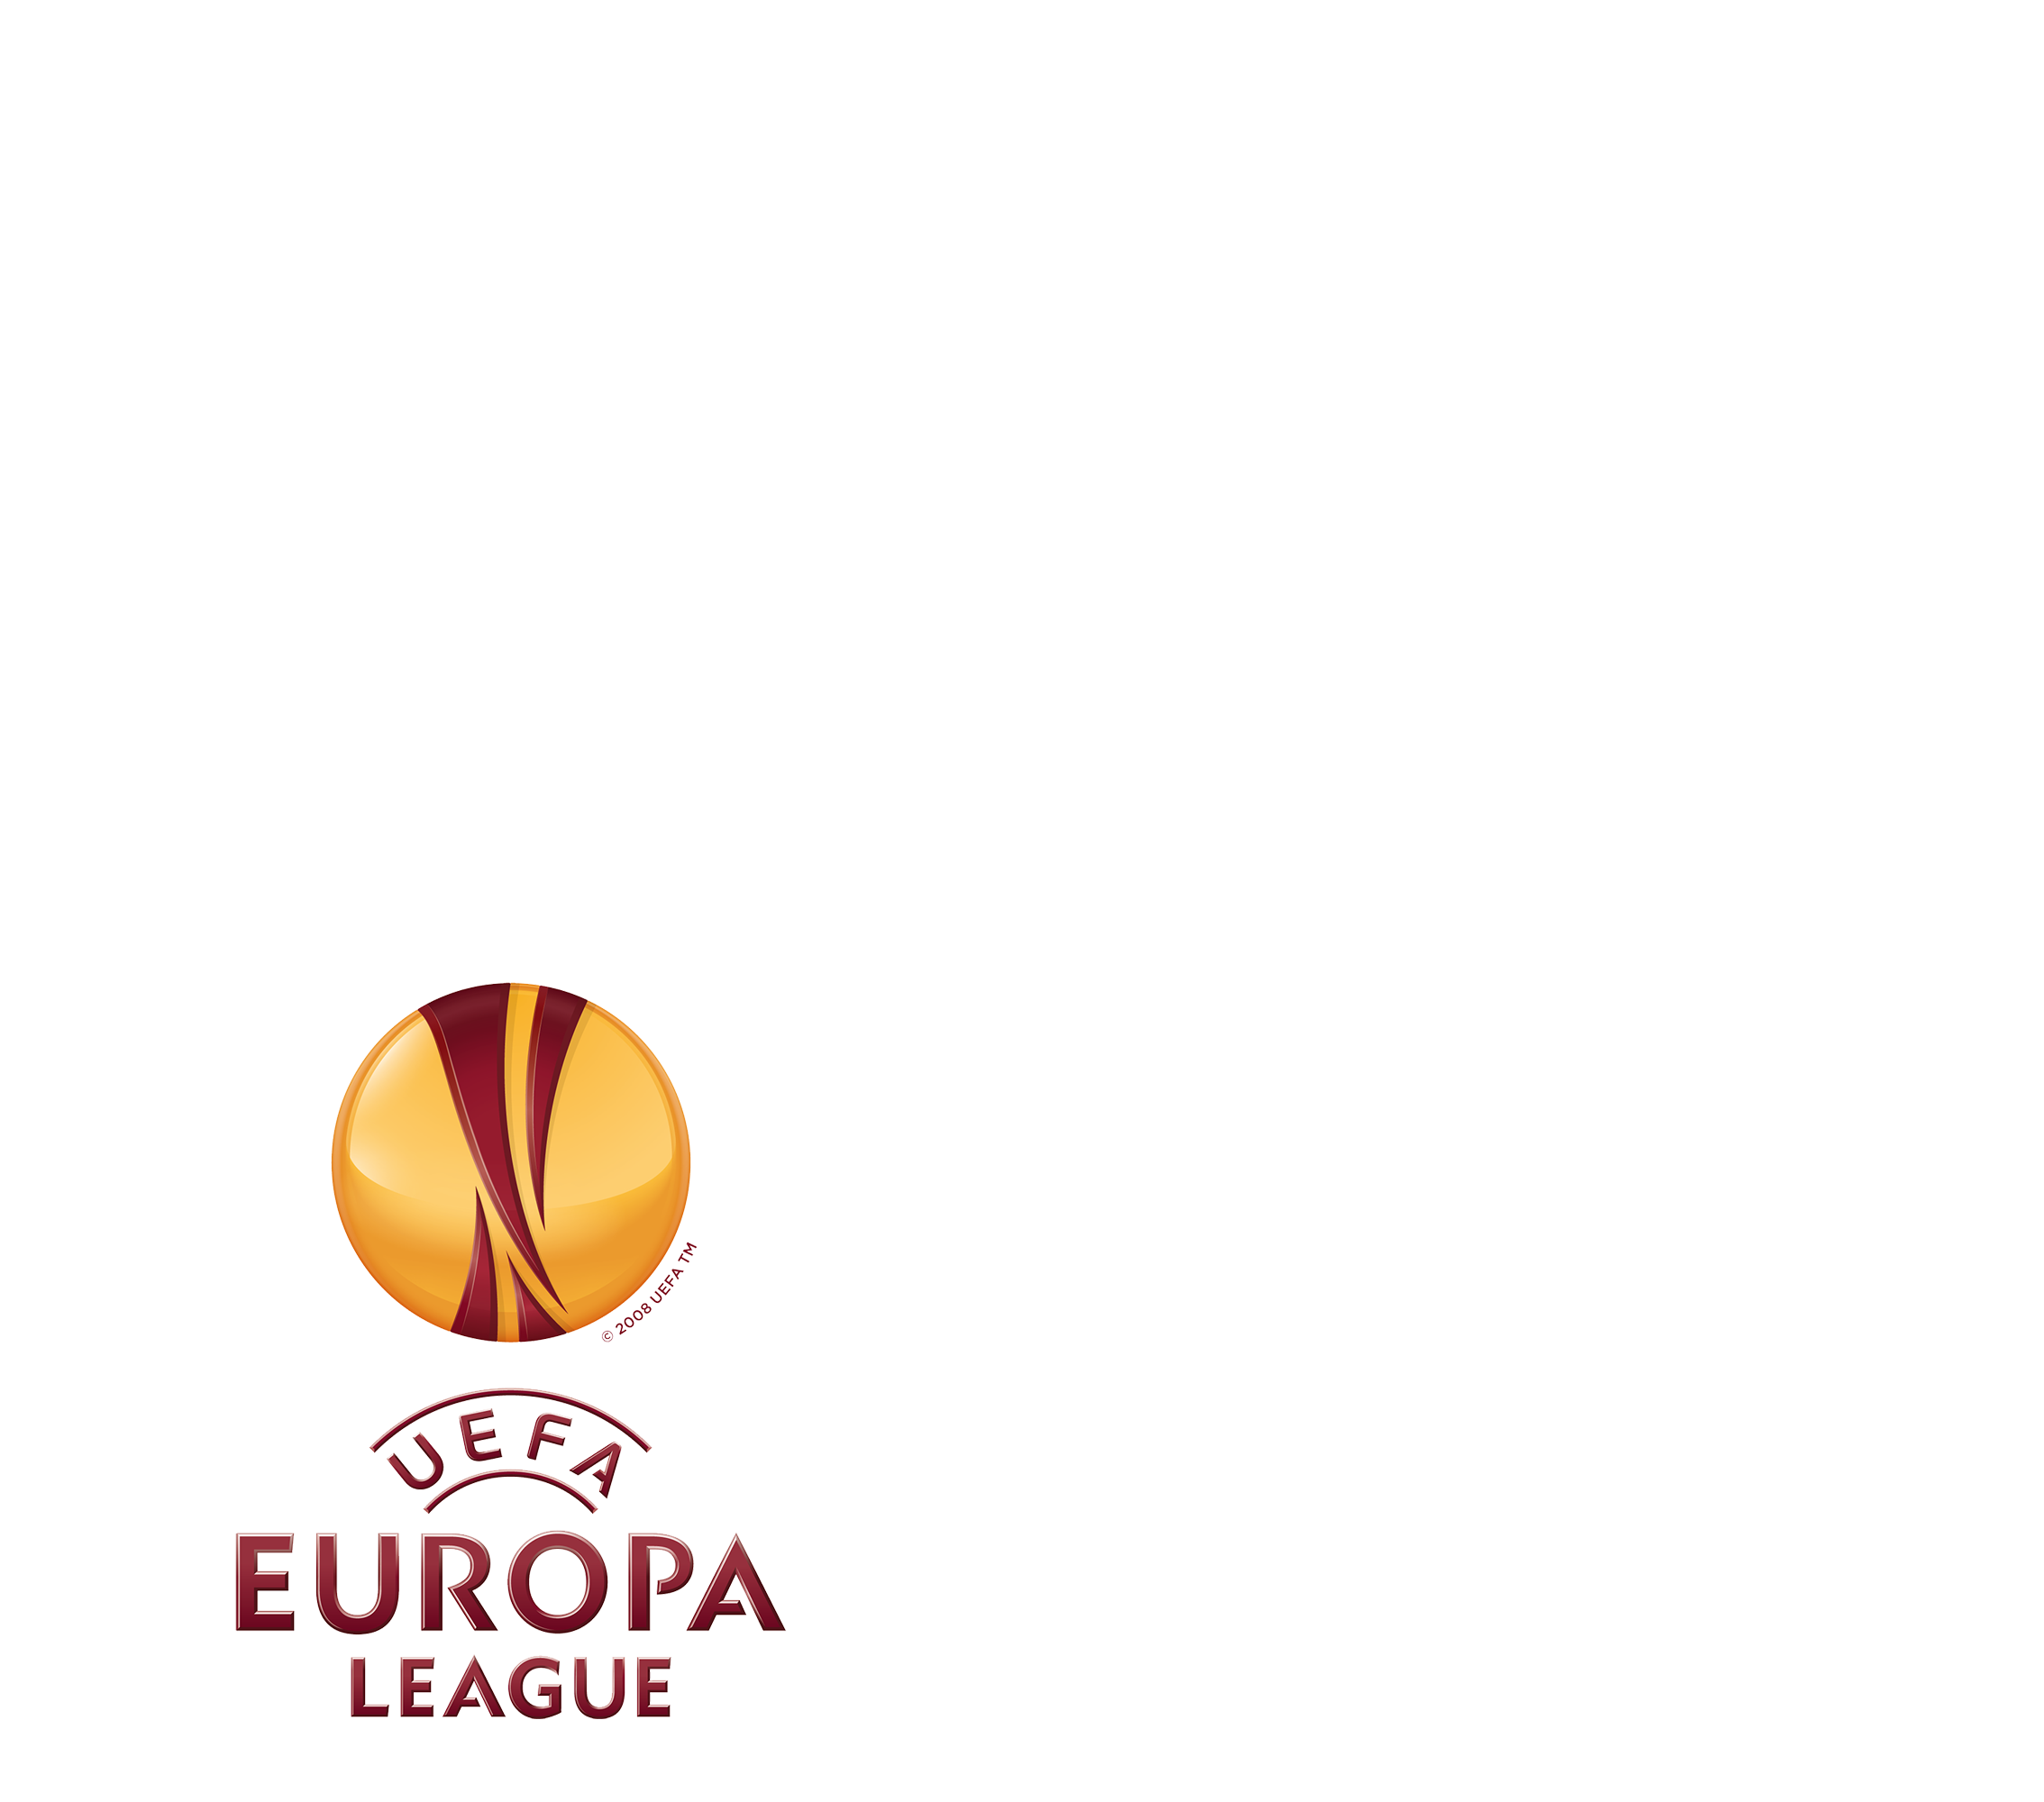 Europa League 2017/18